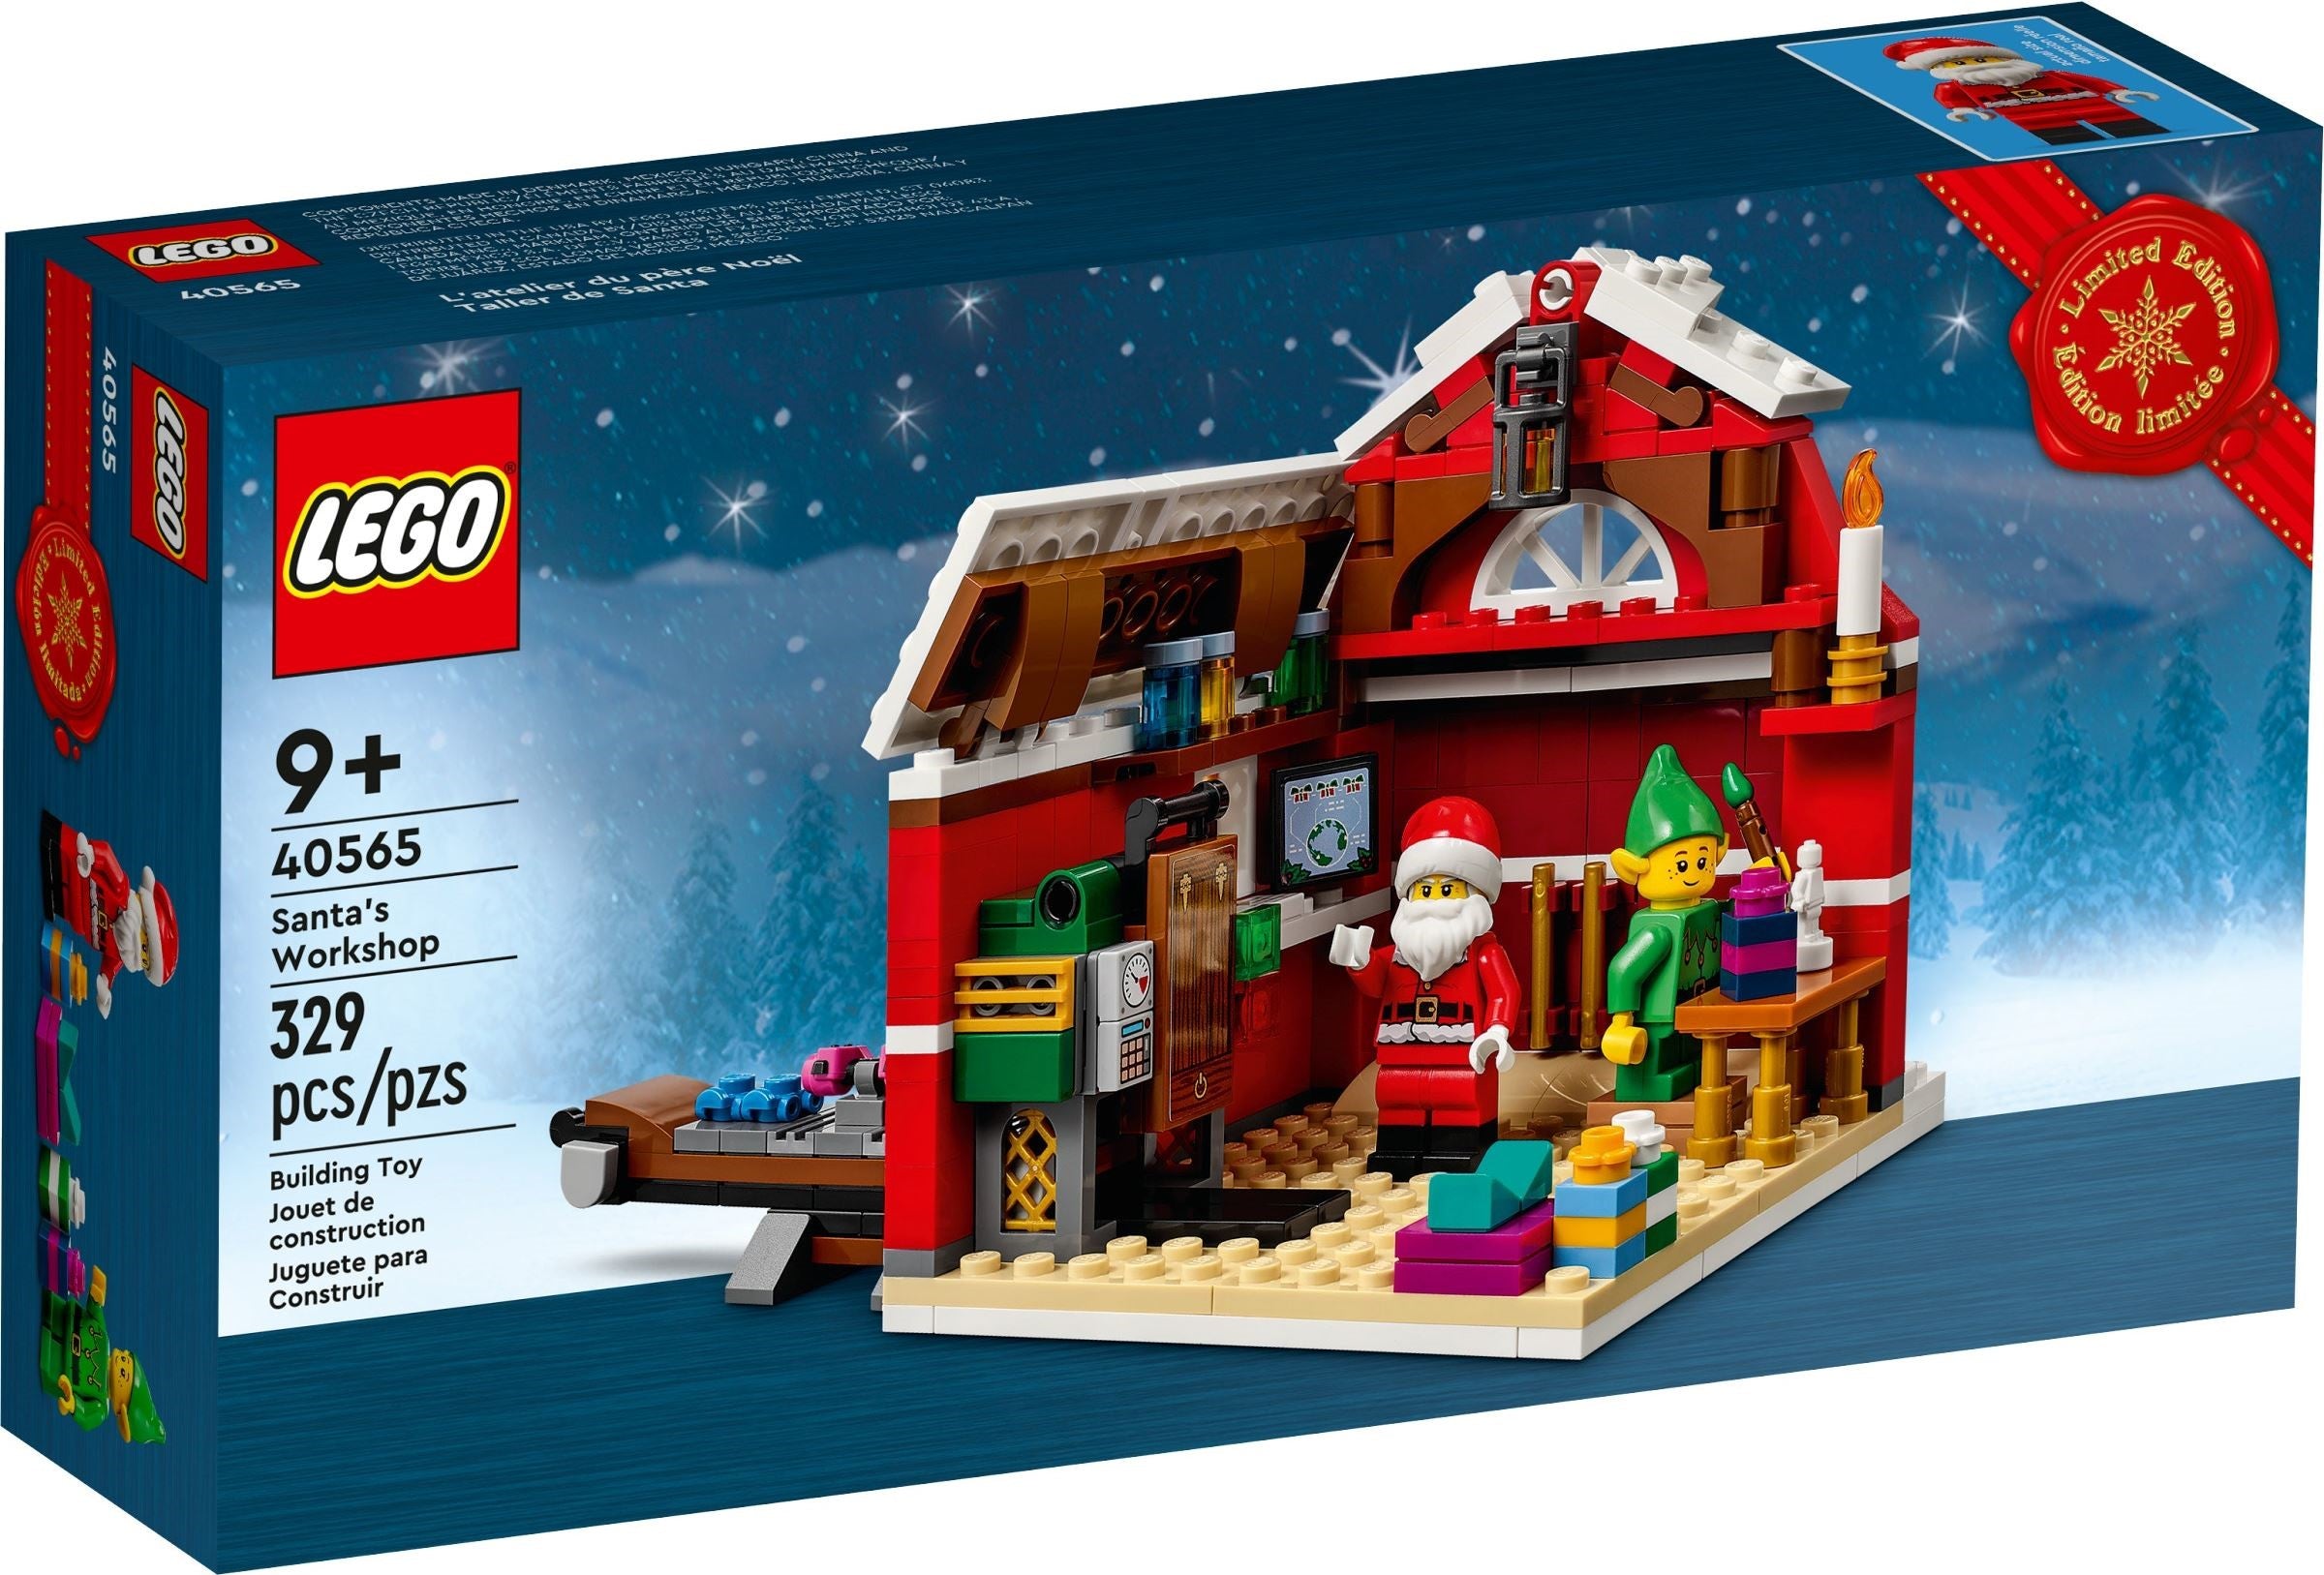 Lego Exclusive 40565 - Santa's Workshop